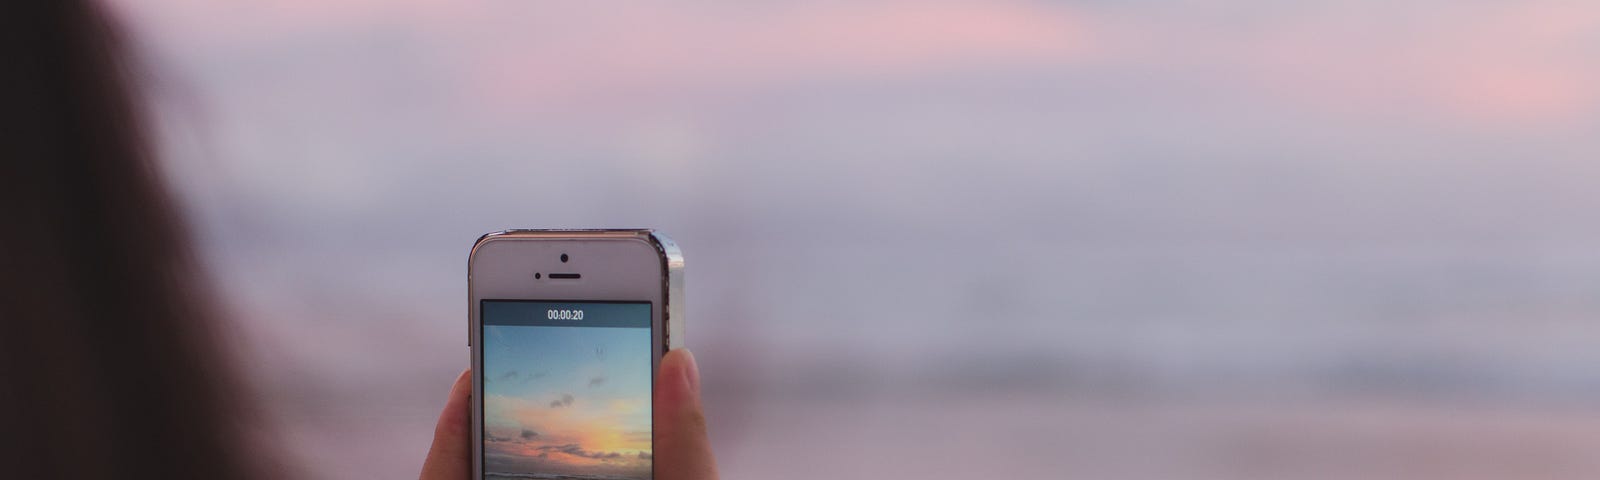 Capturing memories with an iPhone camera